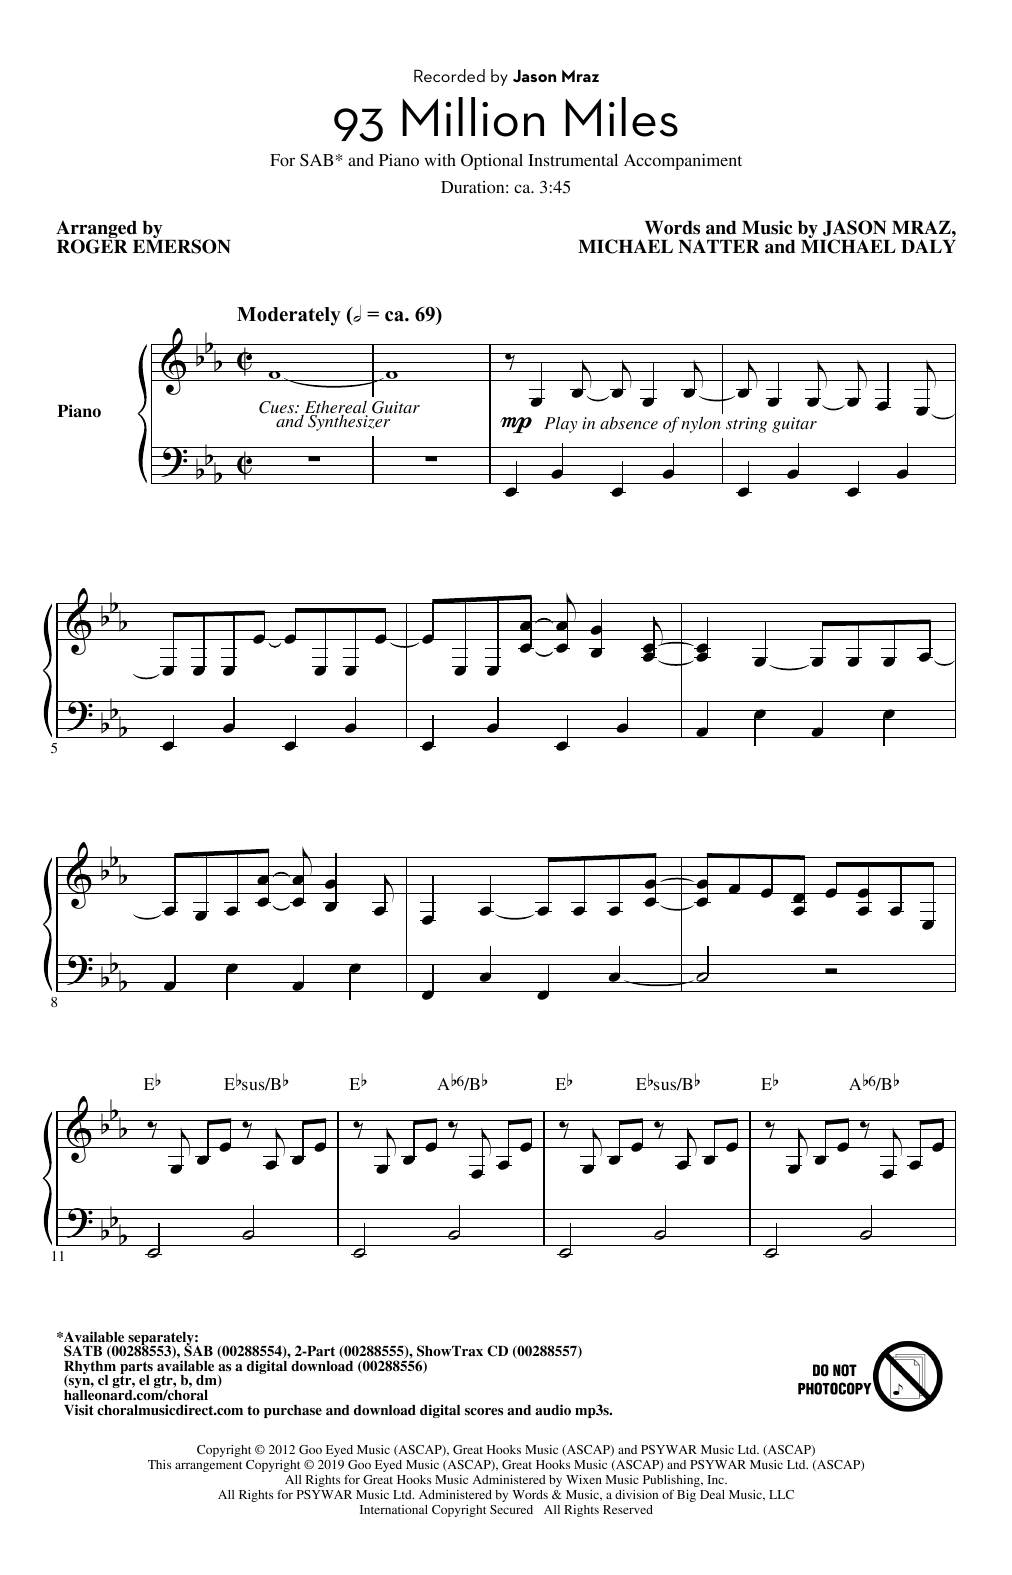 Jason Mraz 93 Million Miles (arr. Roger Emerson) Sheet Music Notes & Chords for 2-Part Choir - Download or Print PDF